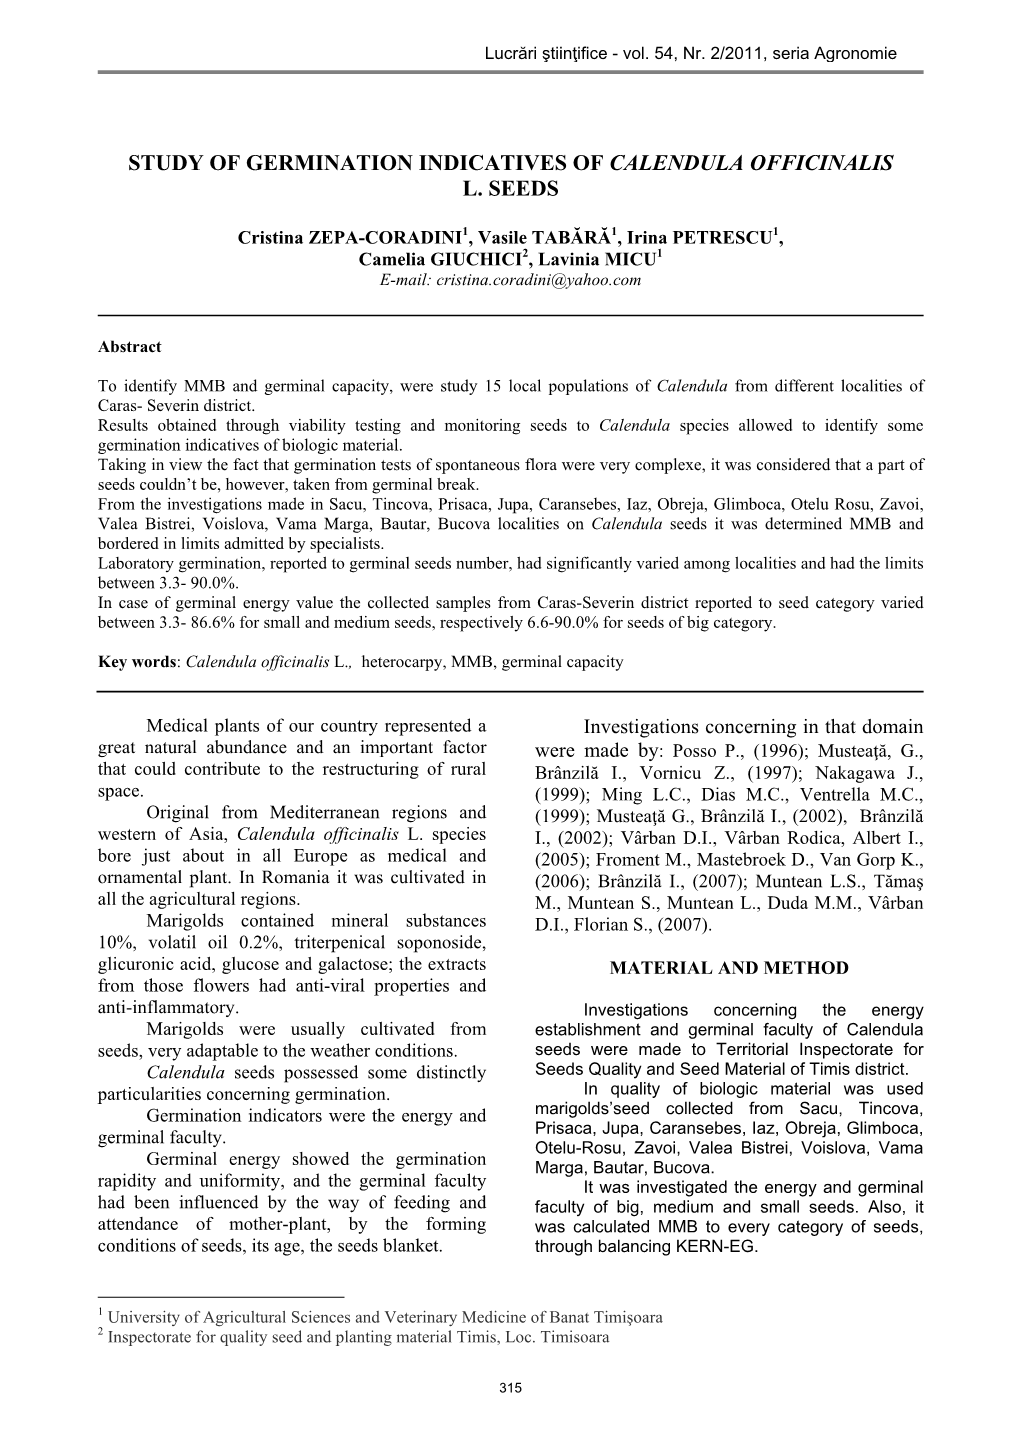 Study of Germination Indicatives of Calendula Officinalis L